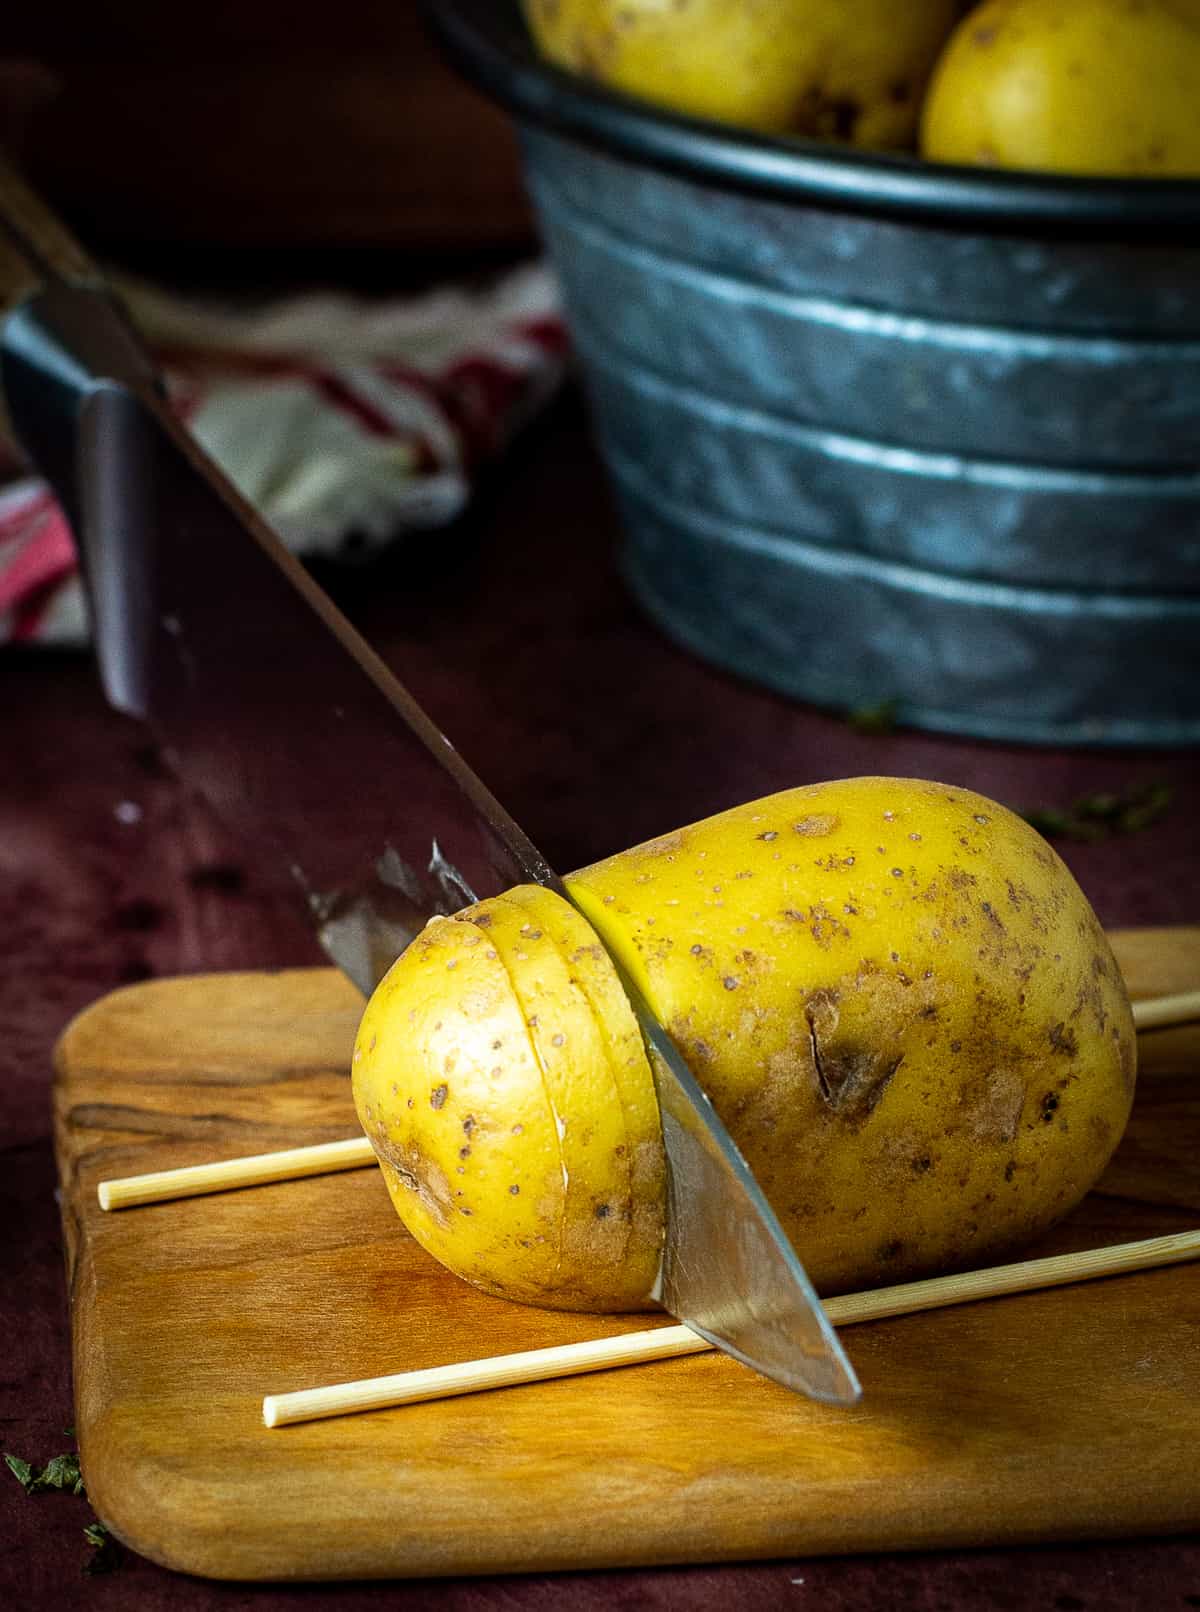 Knife slicing through potato.